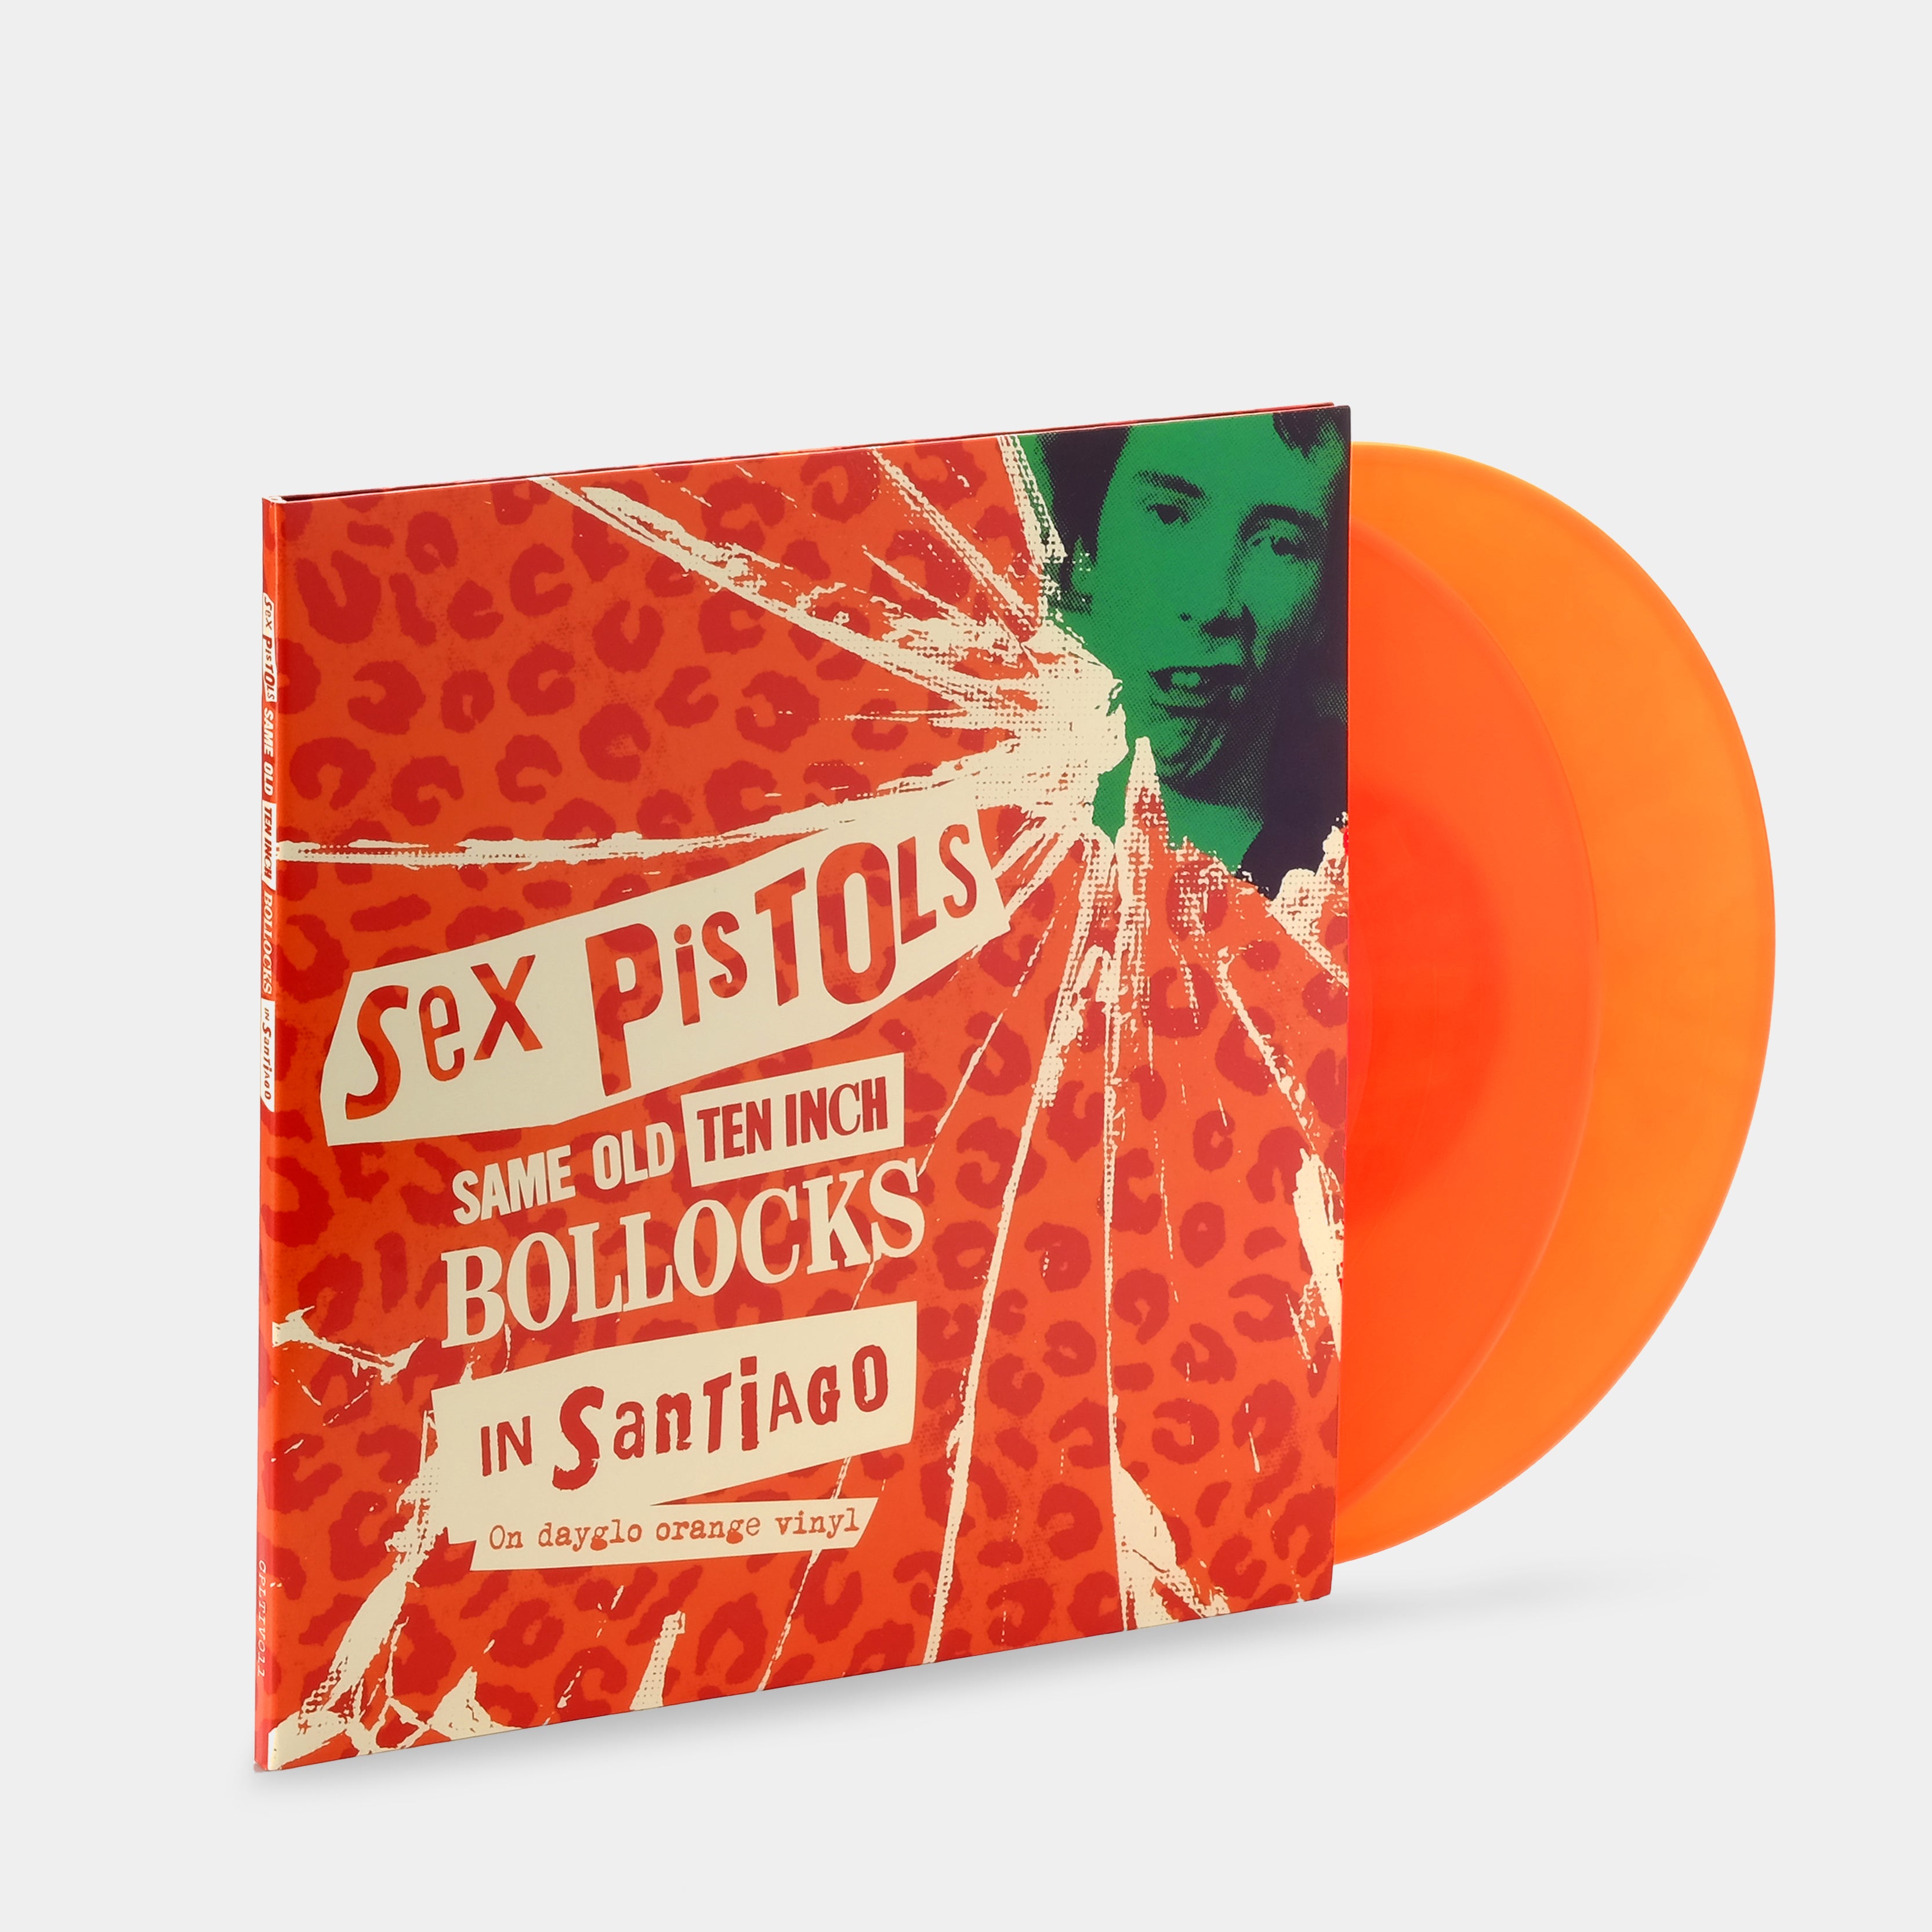 Sex Pistols - Same Old Ten Inch Bollocks In Santiago 2x10" LP Dayglo Orange Vinyl Record